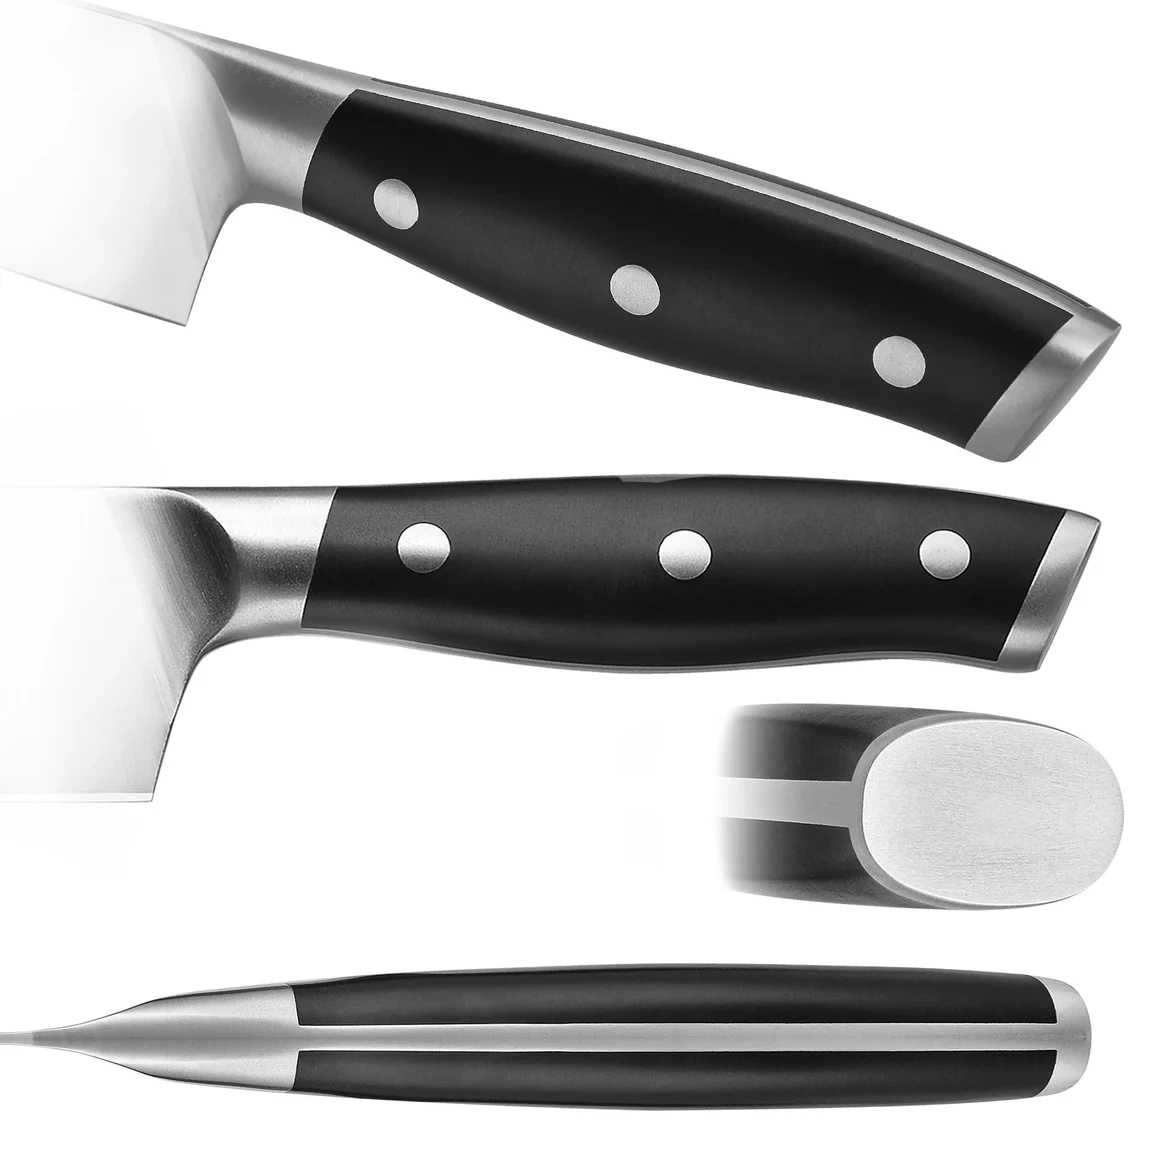 Hinye-Stahl Tri-ply 4 Piece Steak Knives Set